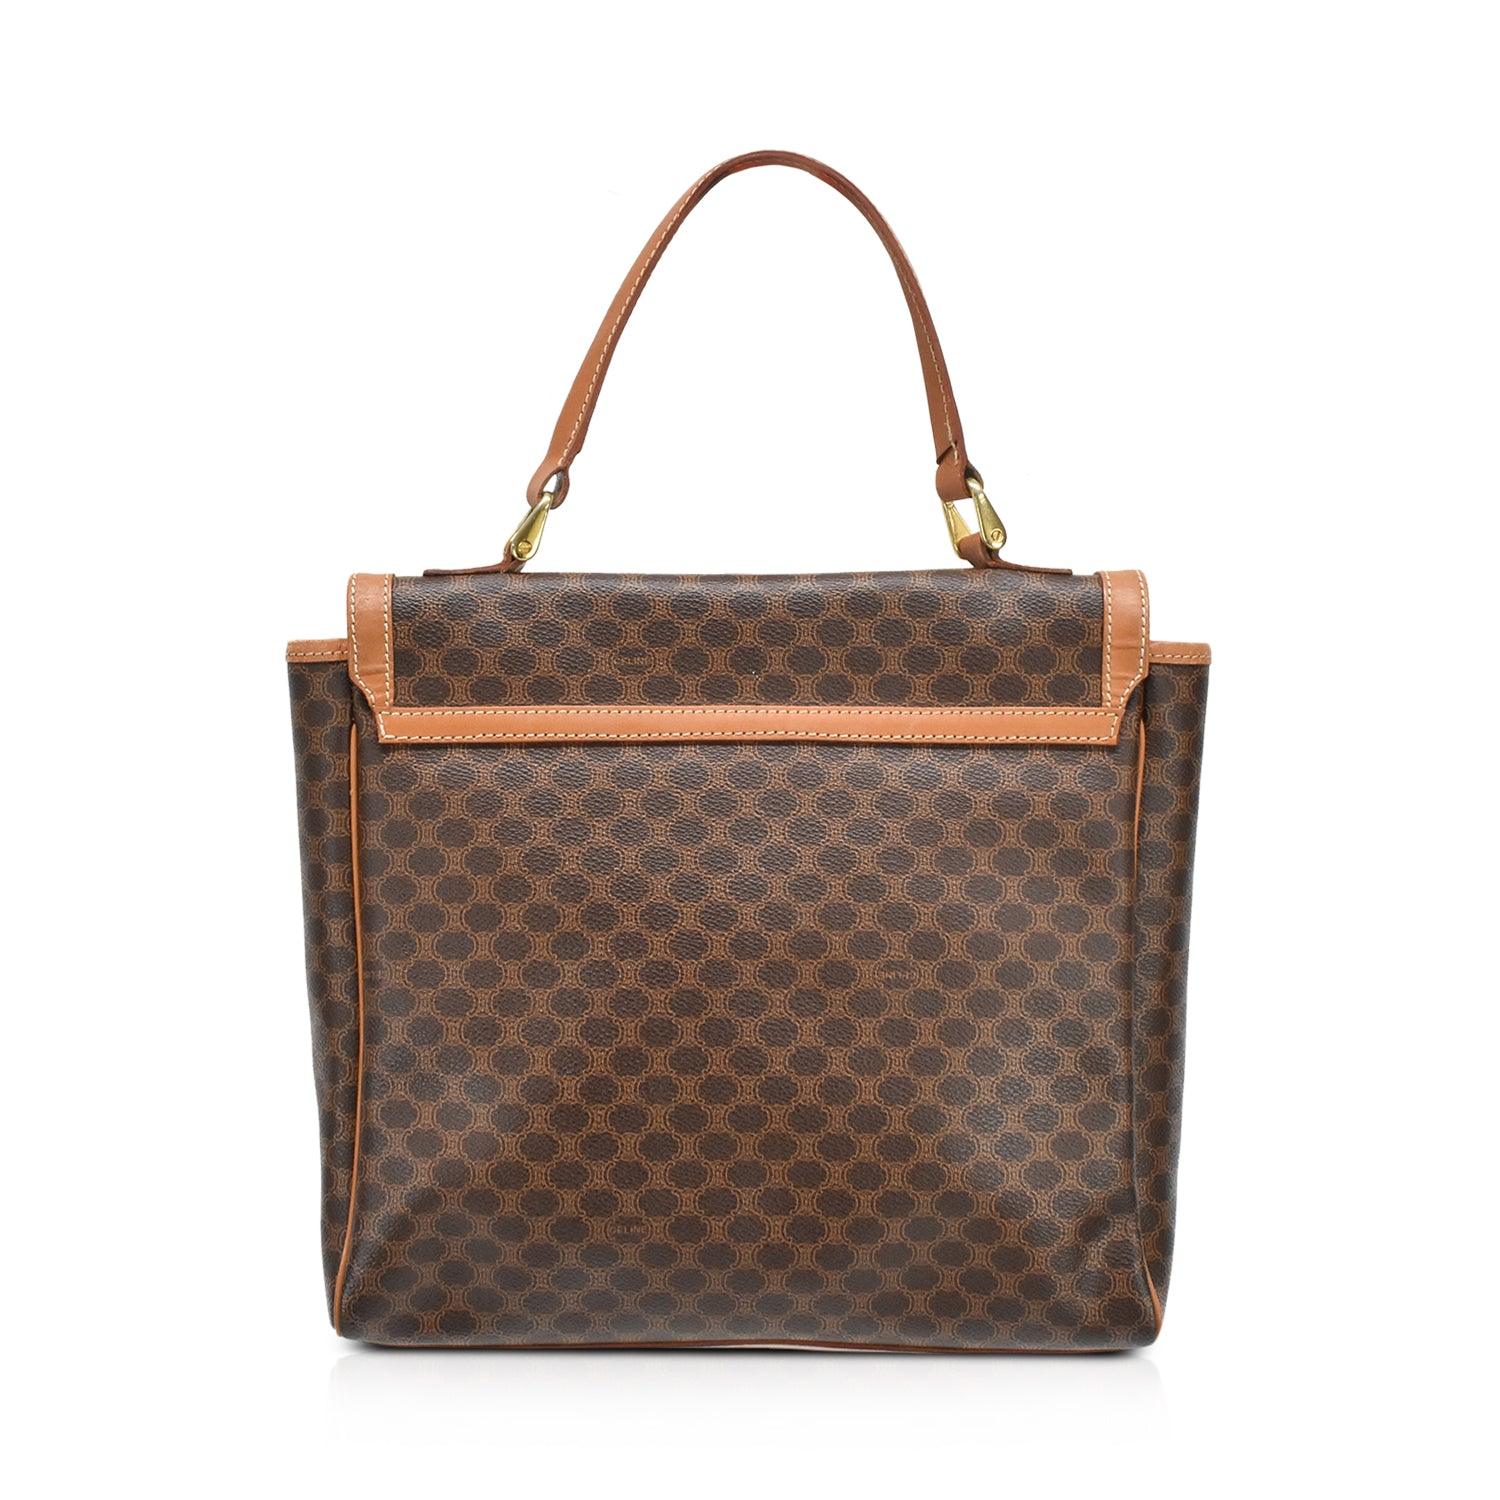 Celine Bag - Fashionably Yours